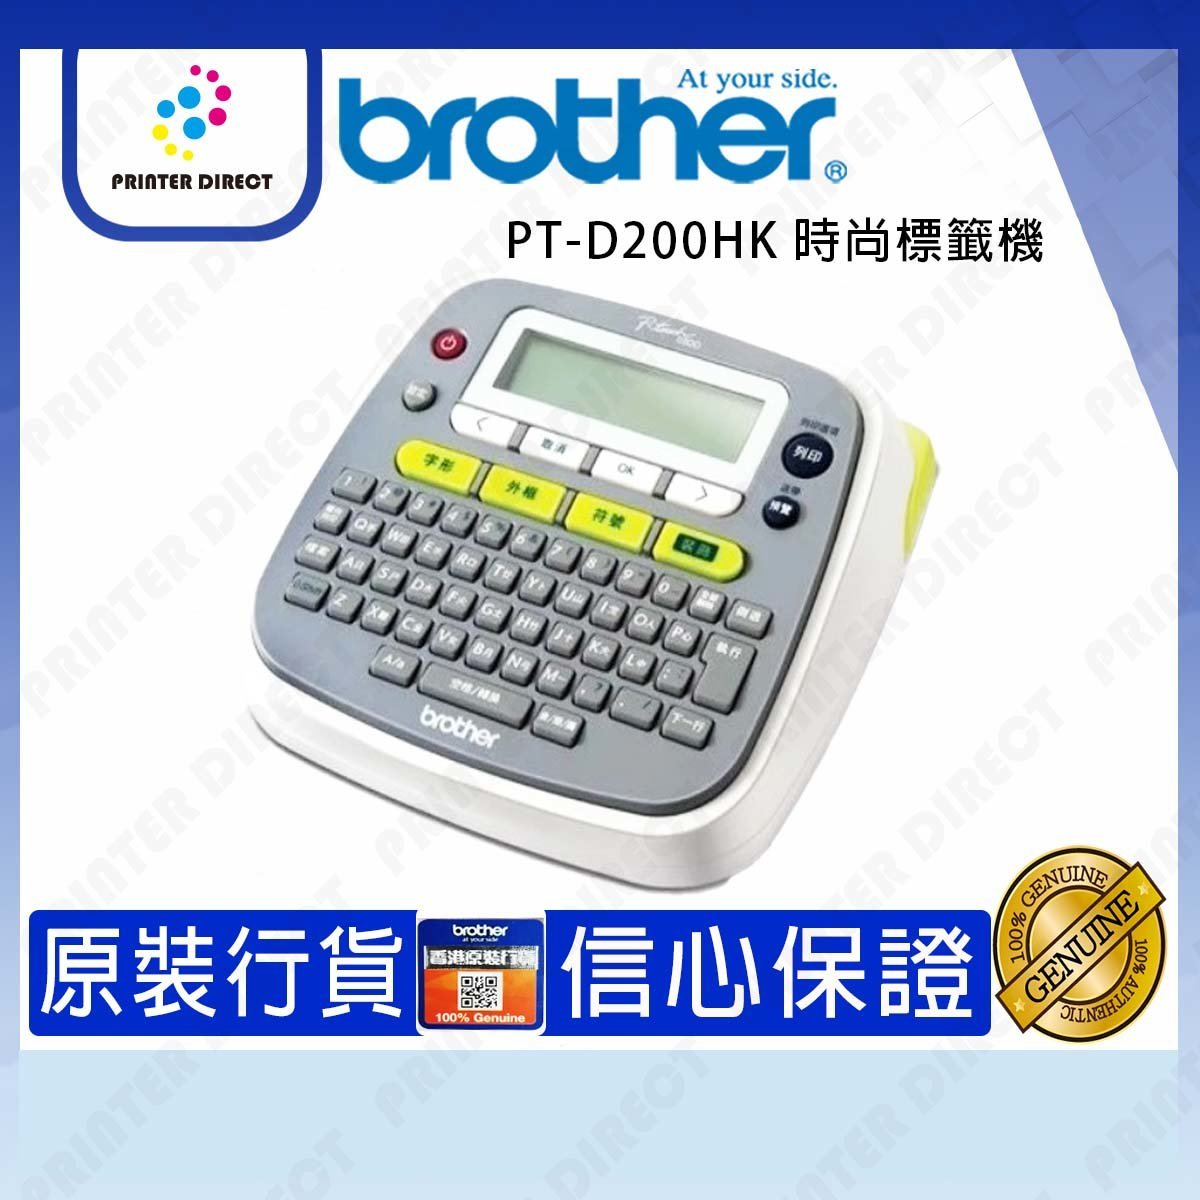 BROTHER - PT-D200HK #D200HK LABE PRINTER 時尚標籤機 中文版 可打中英日文